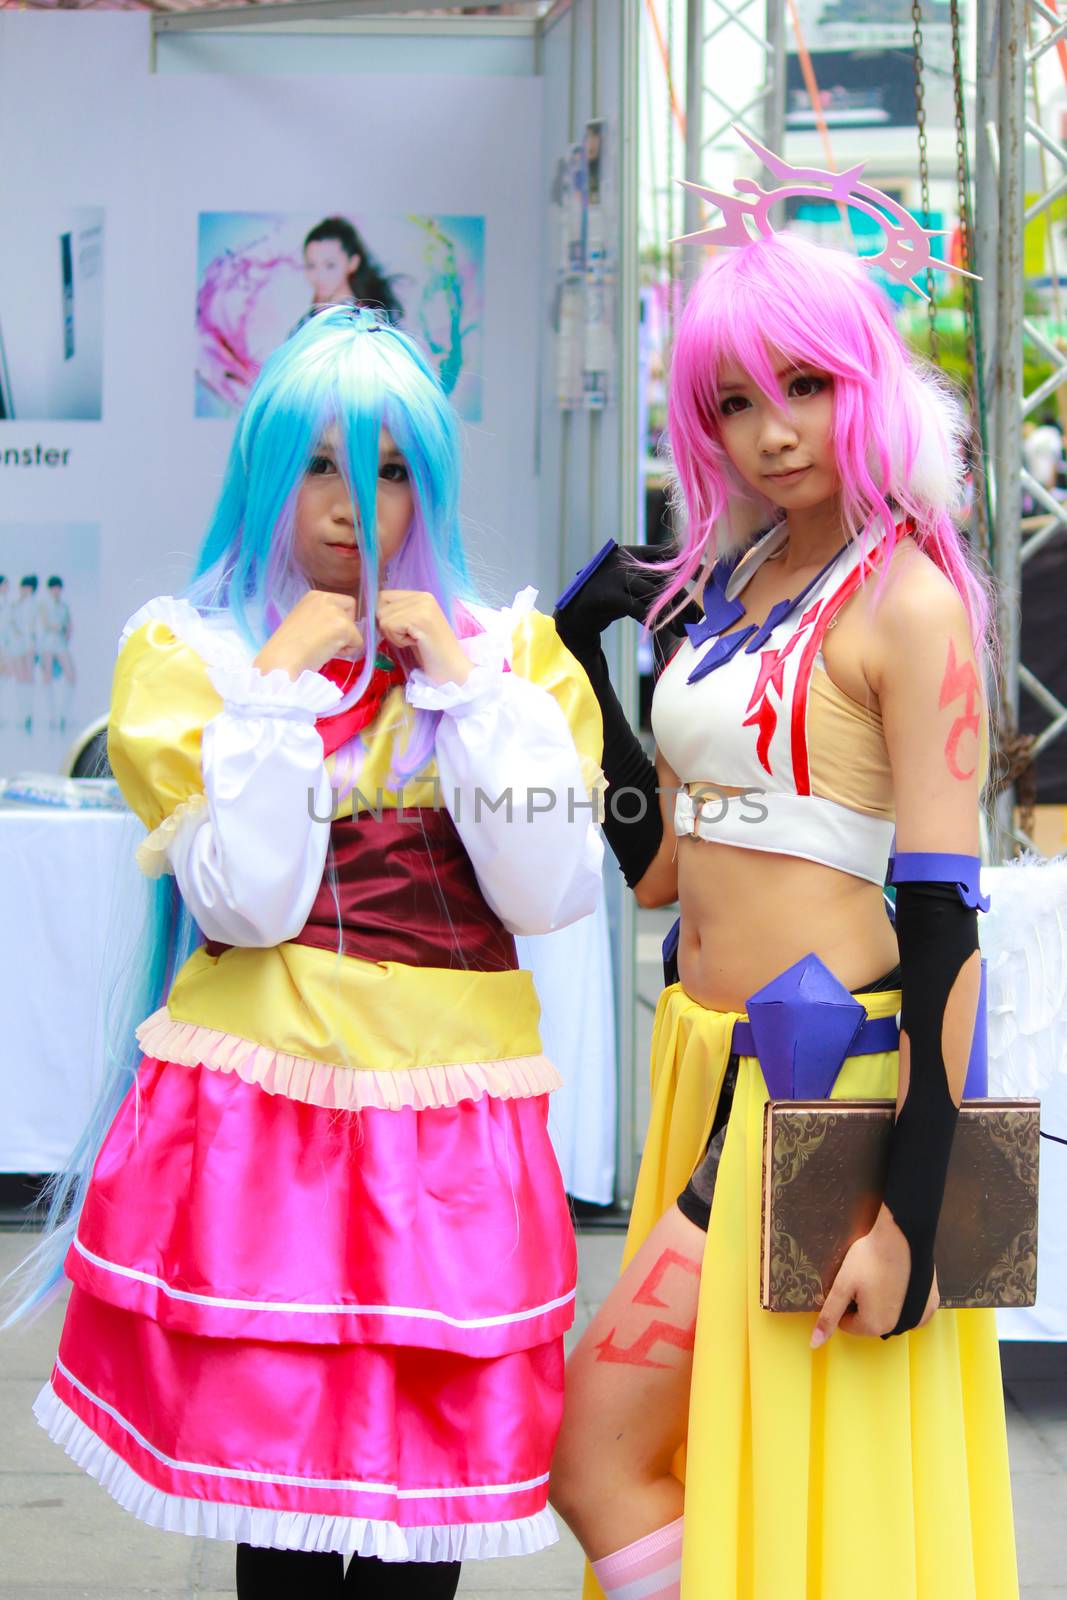 Bangkok - Aug 31: An unidentified Japanese anime cosplay Shiro and Jibril pose  on August 31, 2014 at Central World, Bangkok, Thailand.